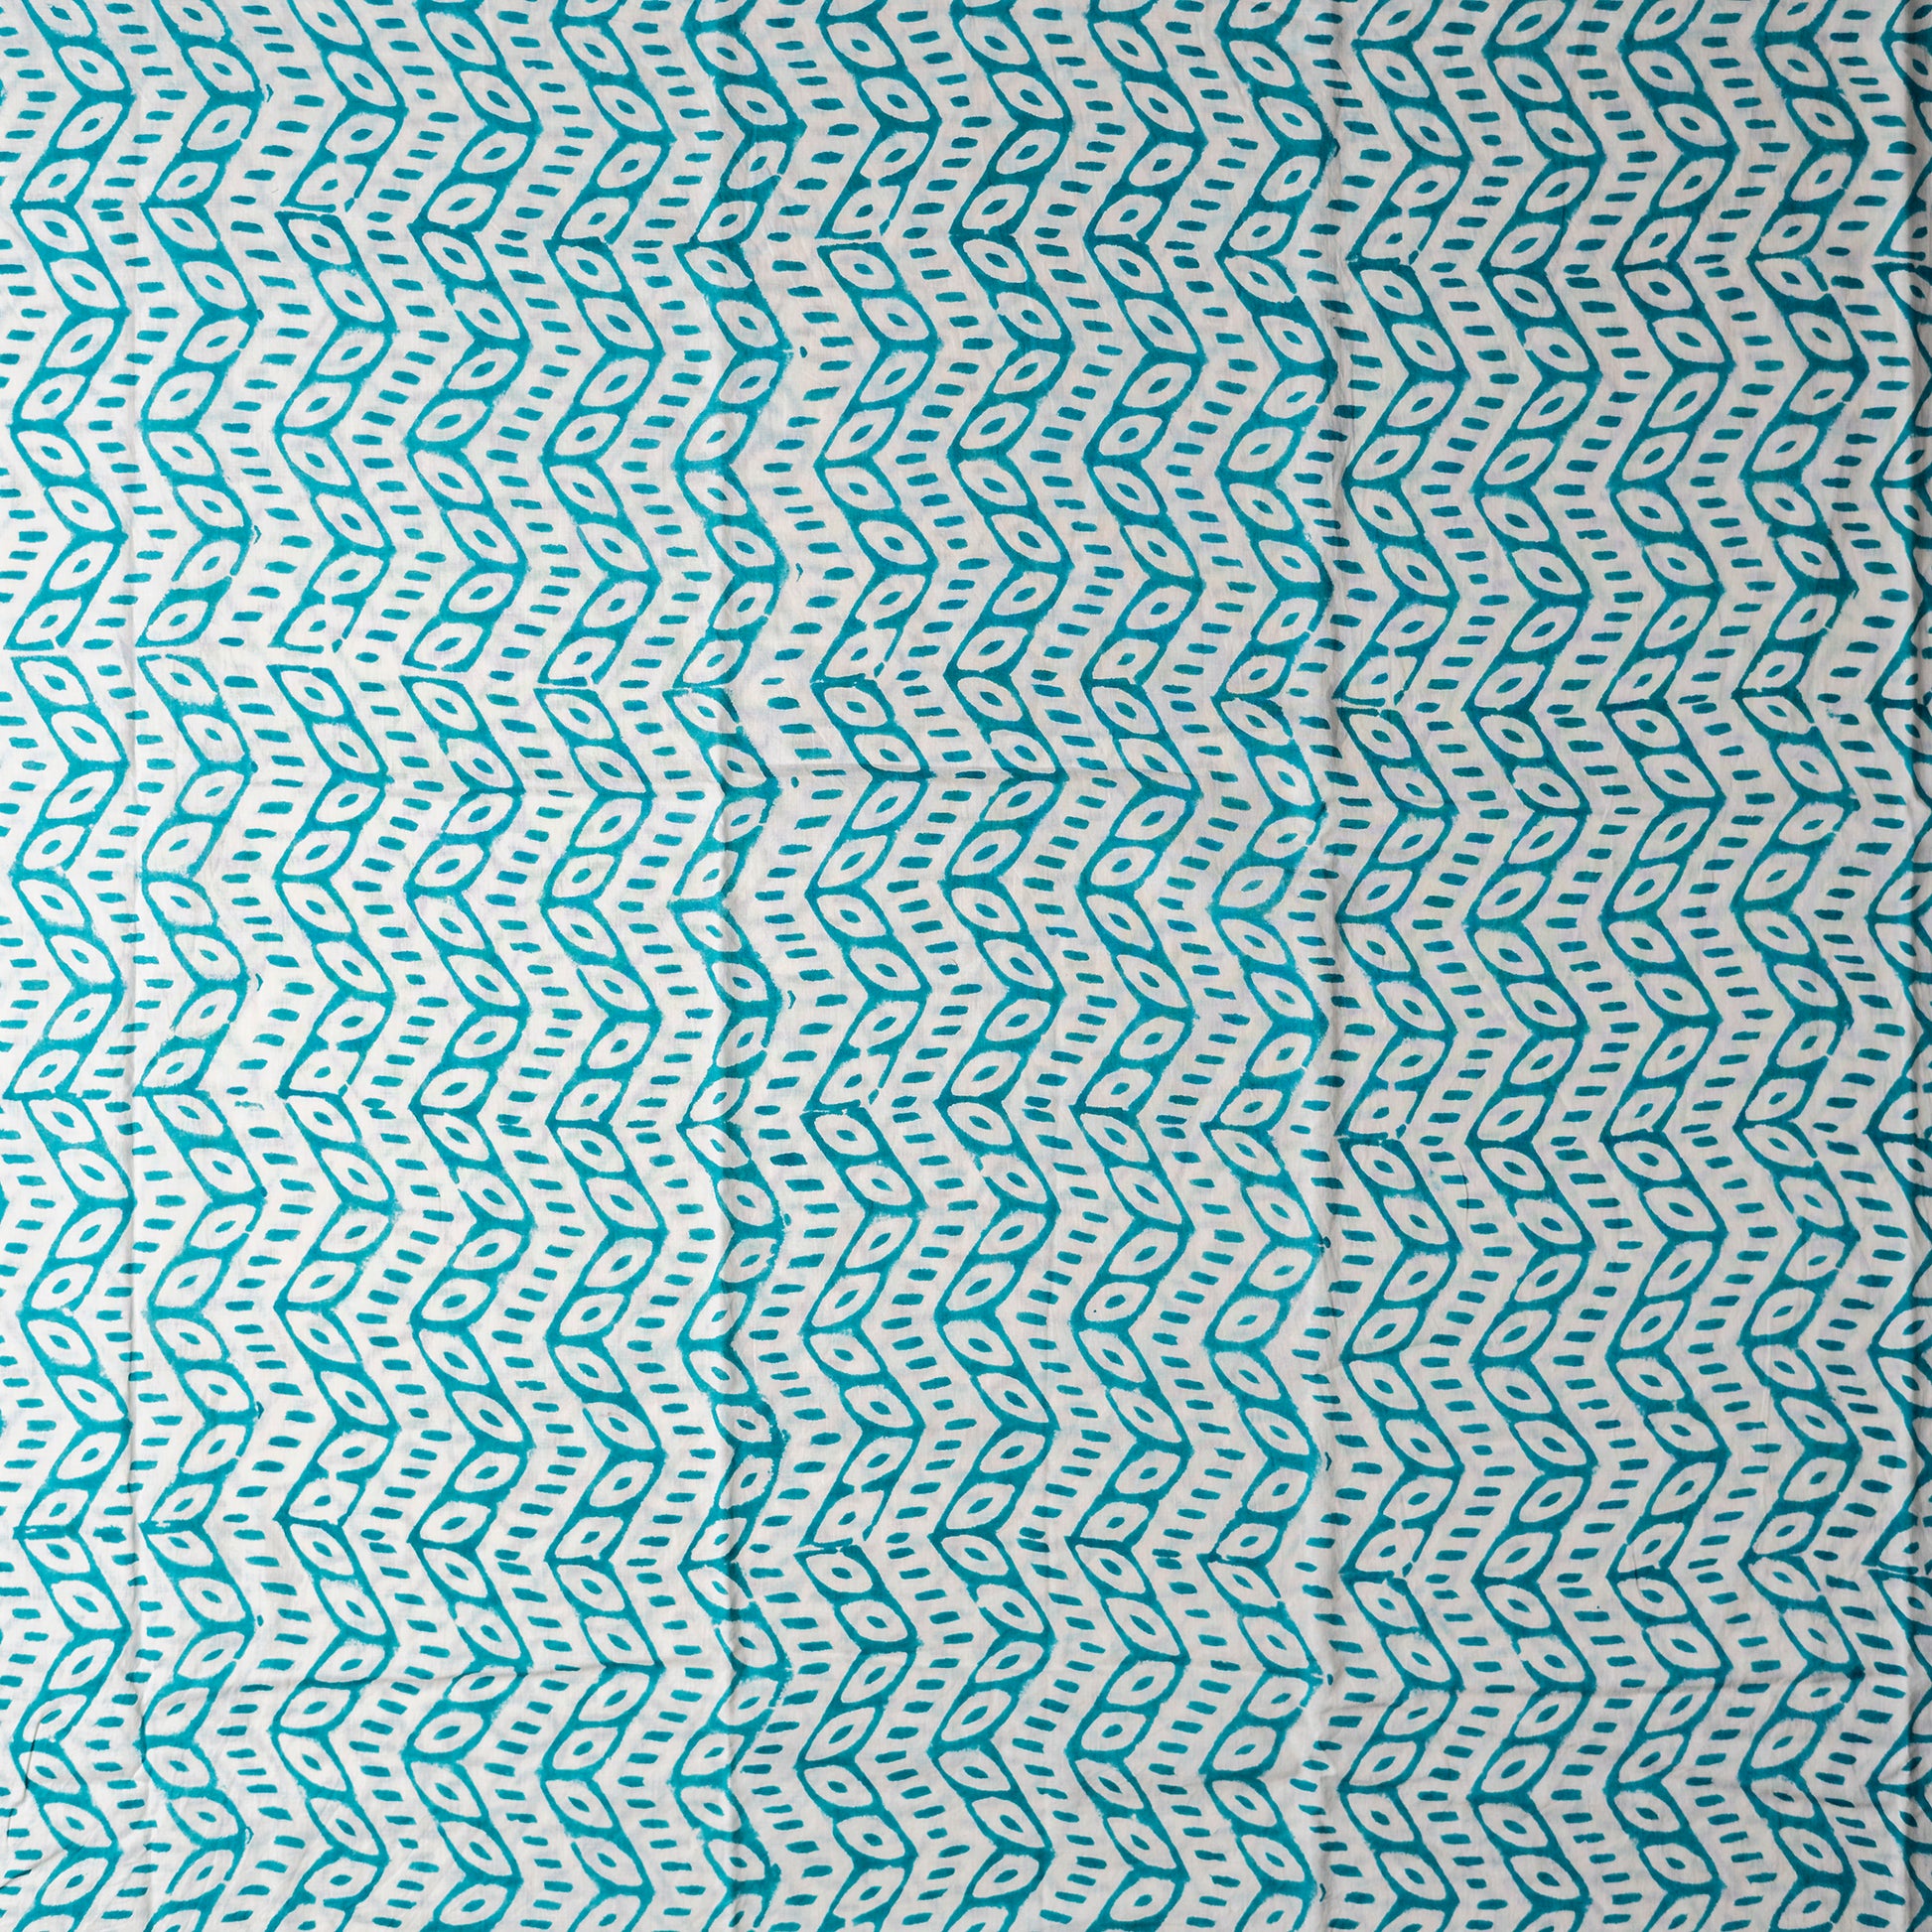 Cotton bottom with blue color prints